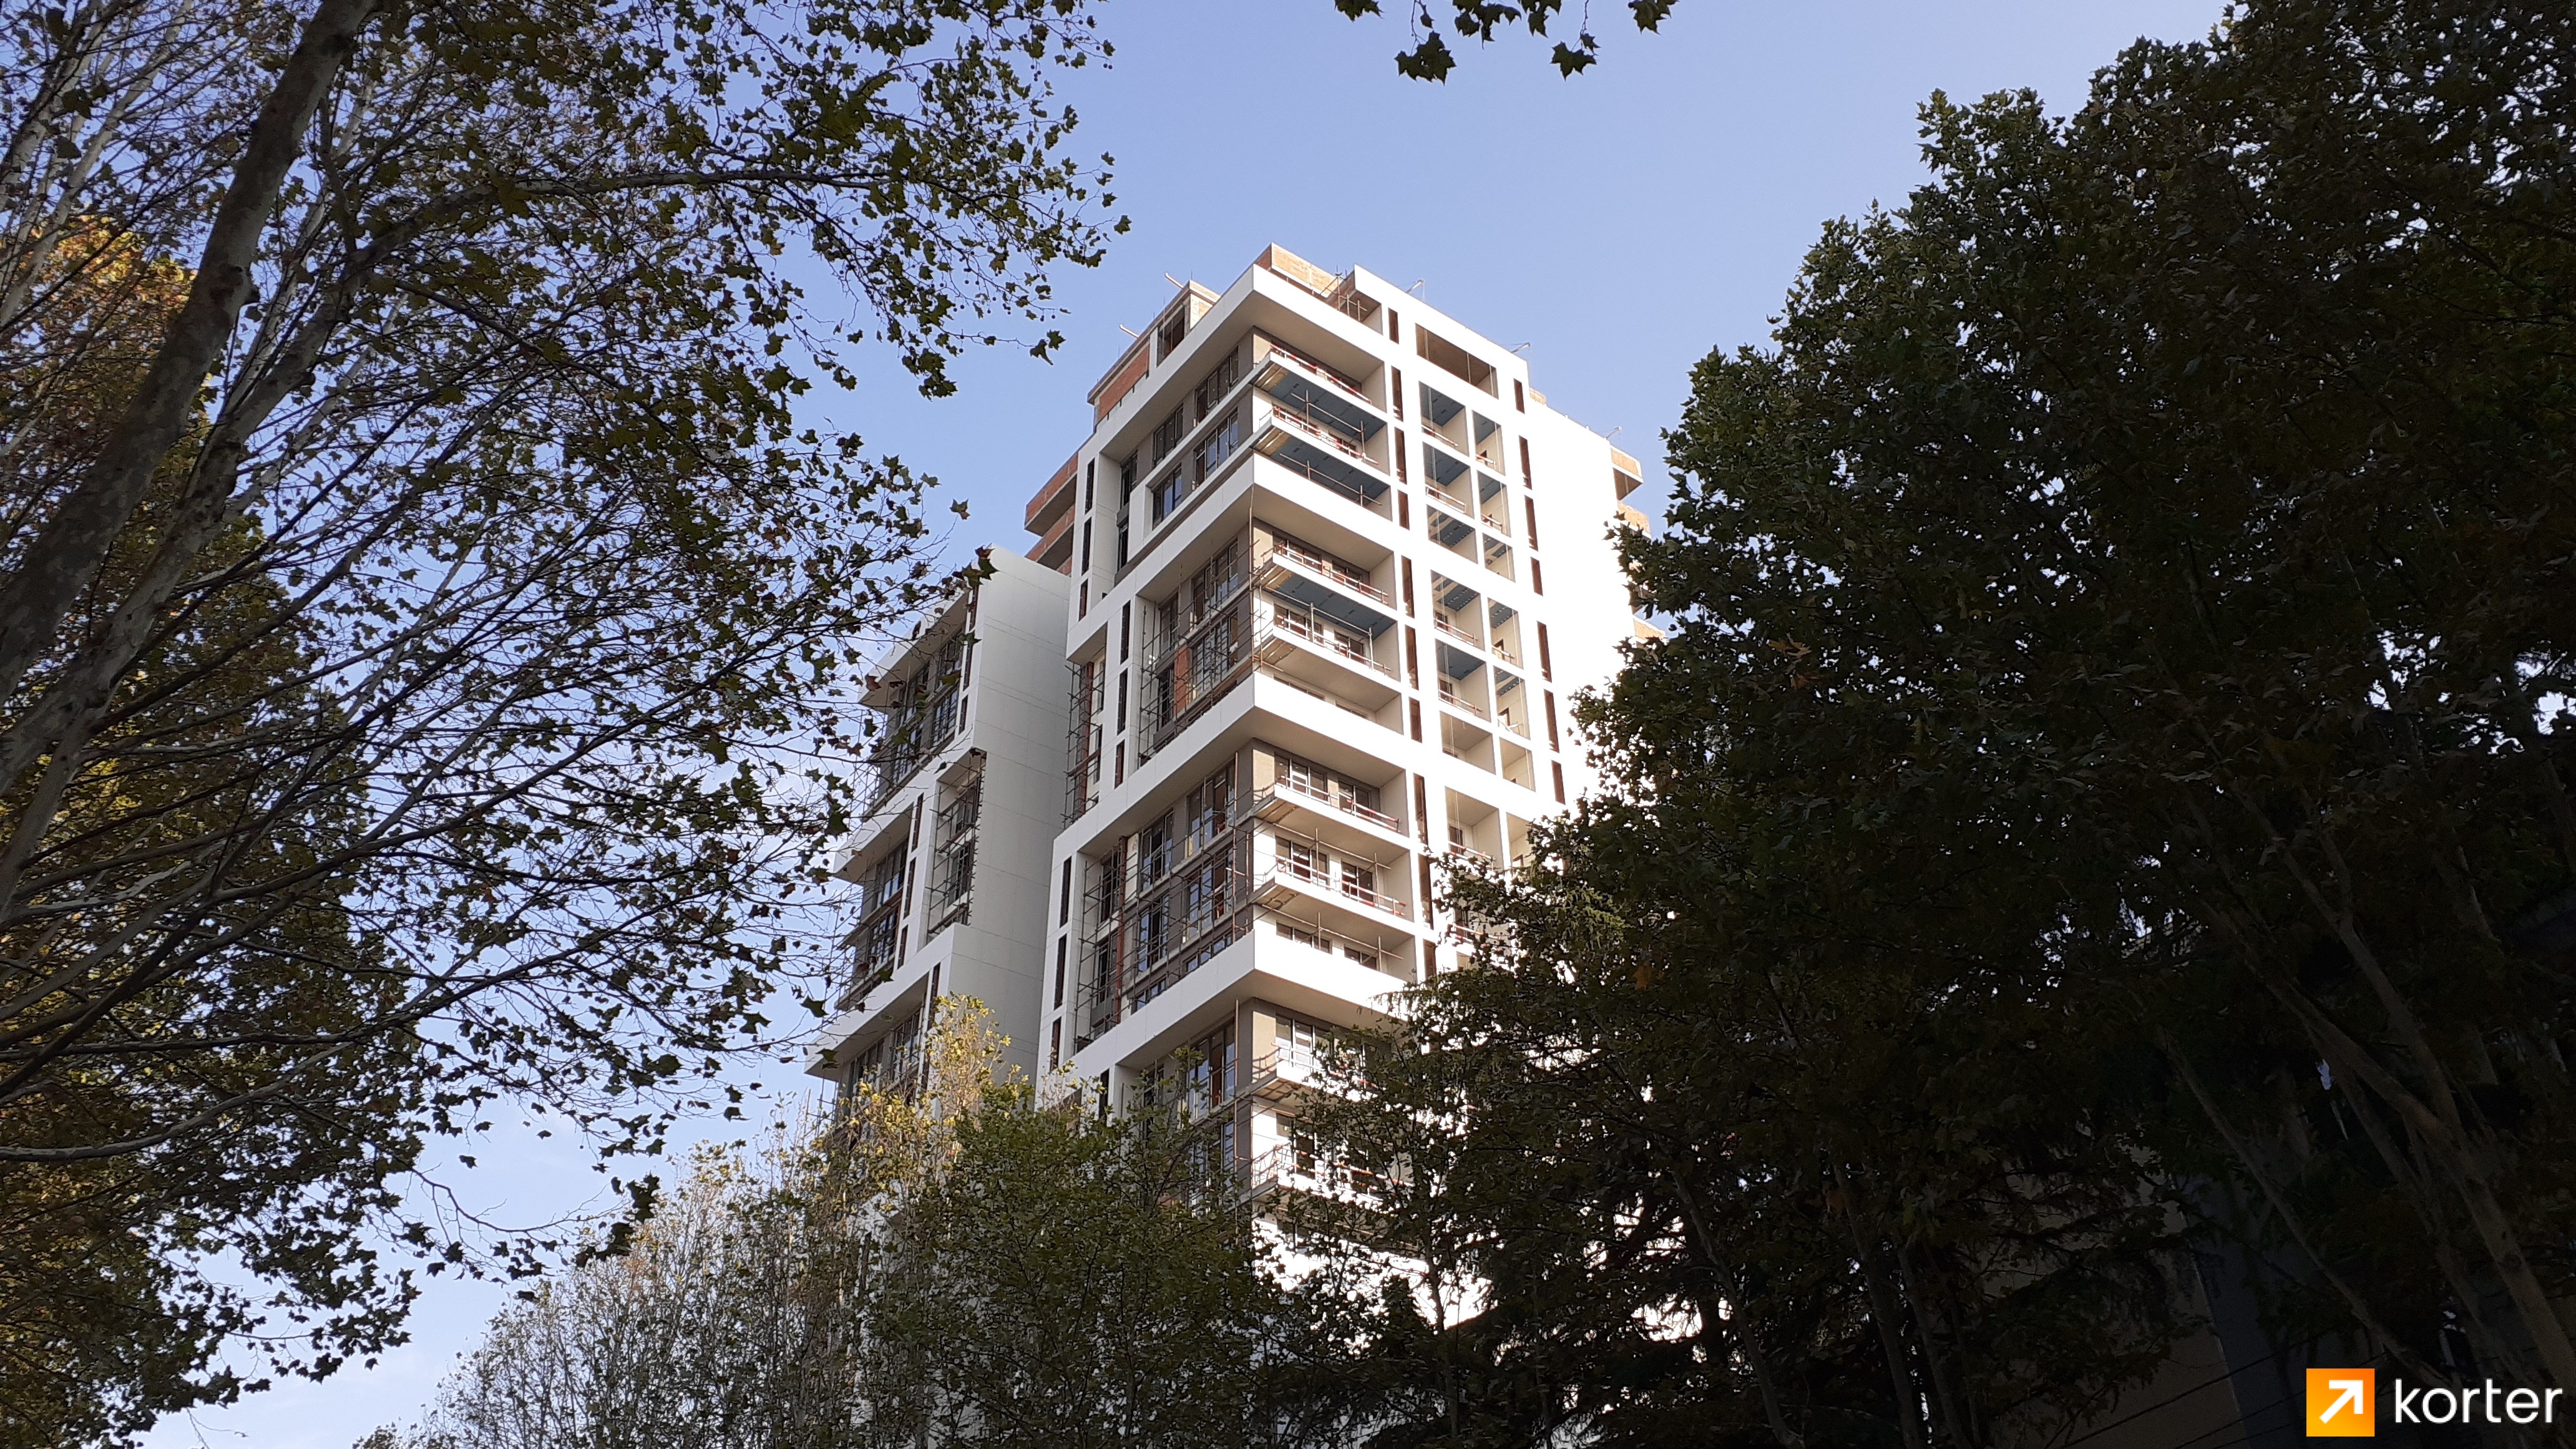 Construction progress House on Chavchavadze 30 - Angle 2, October 2019